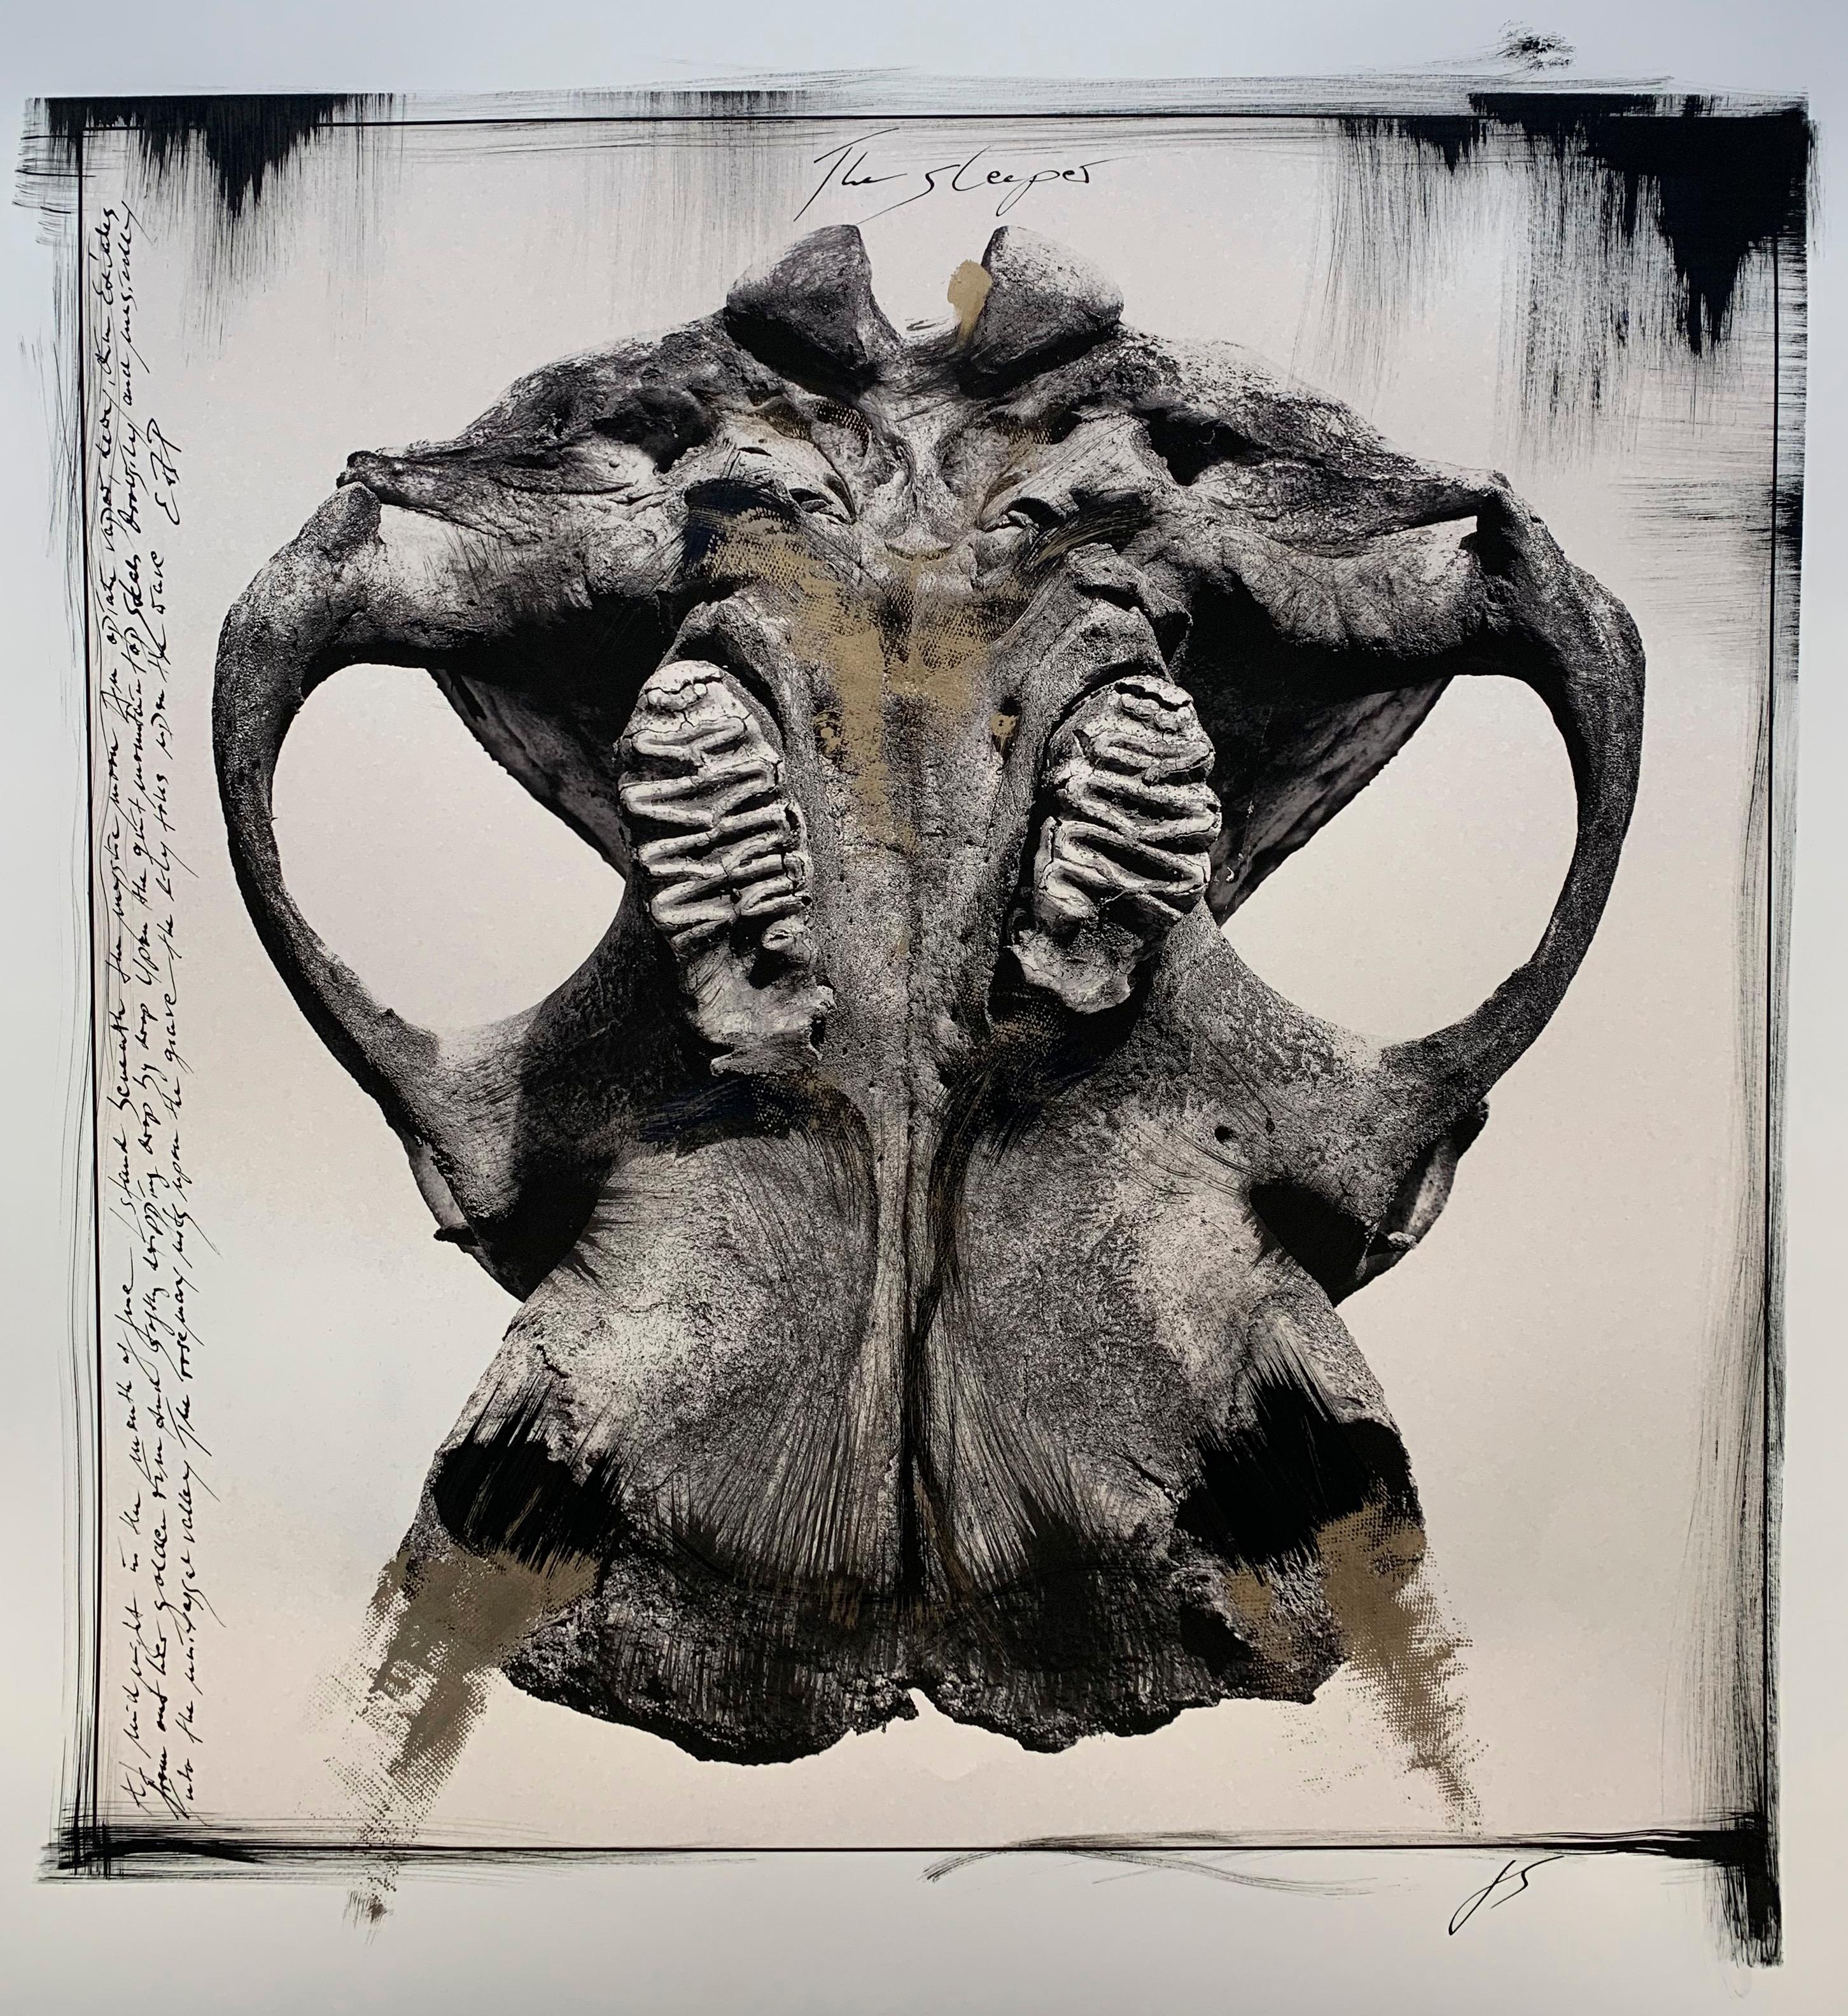 Joachim Schmeisser Animal Painting - "Skull", Africa, Elephant, Painting, Photography, Mixed Media, animal